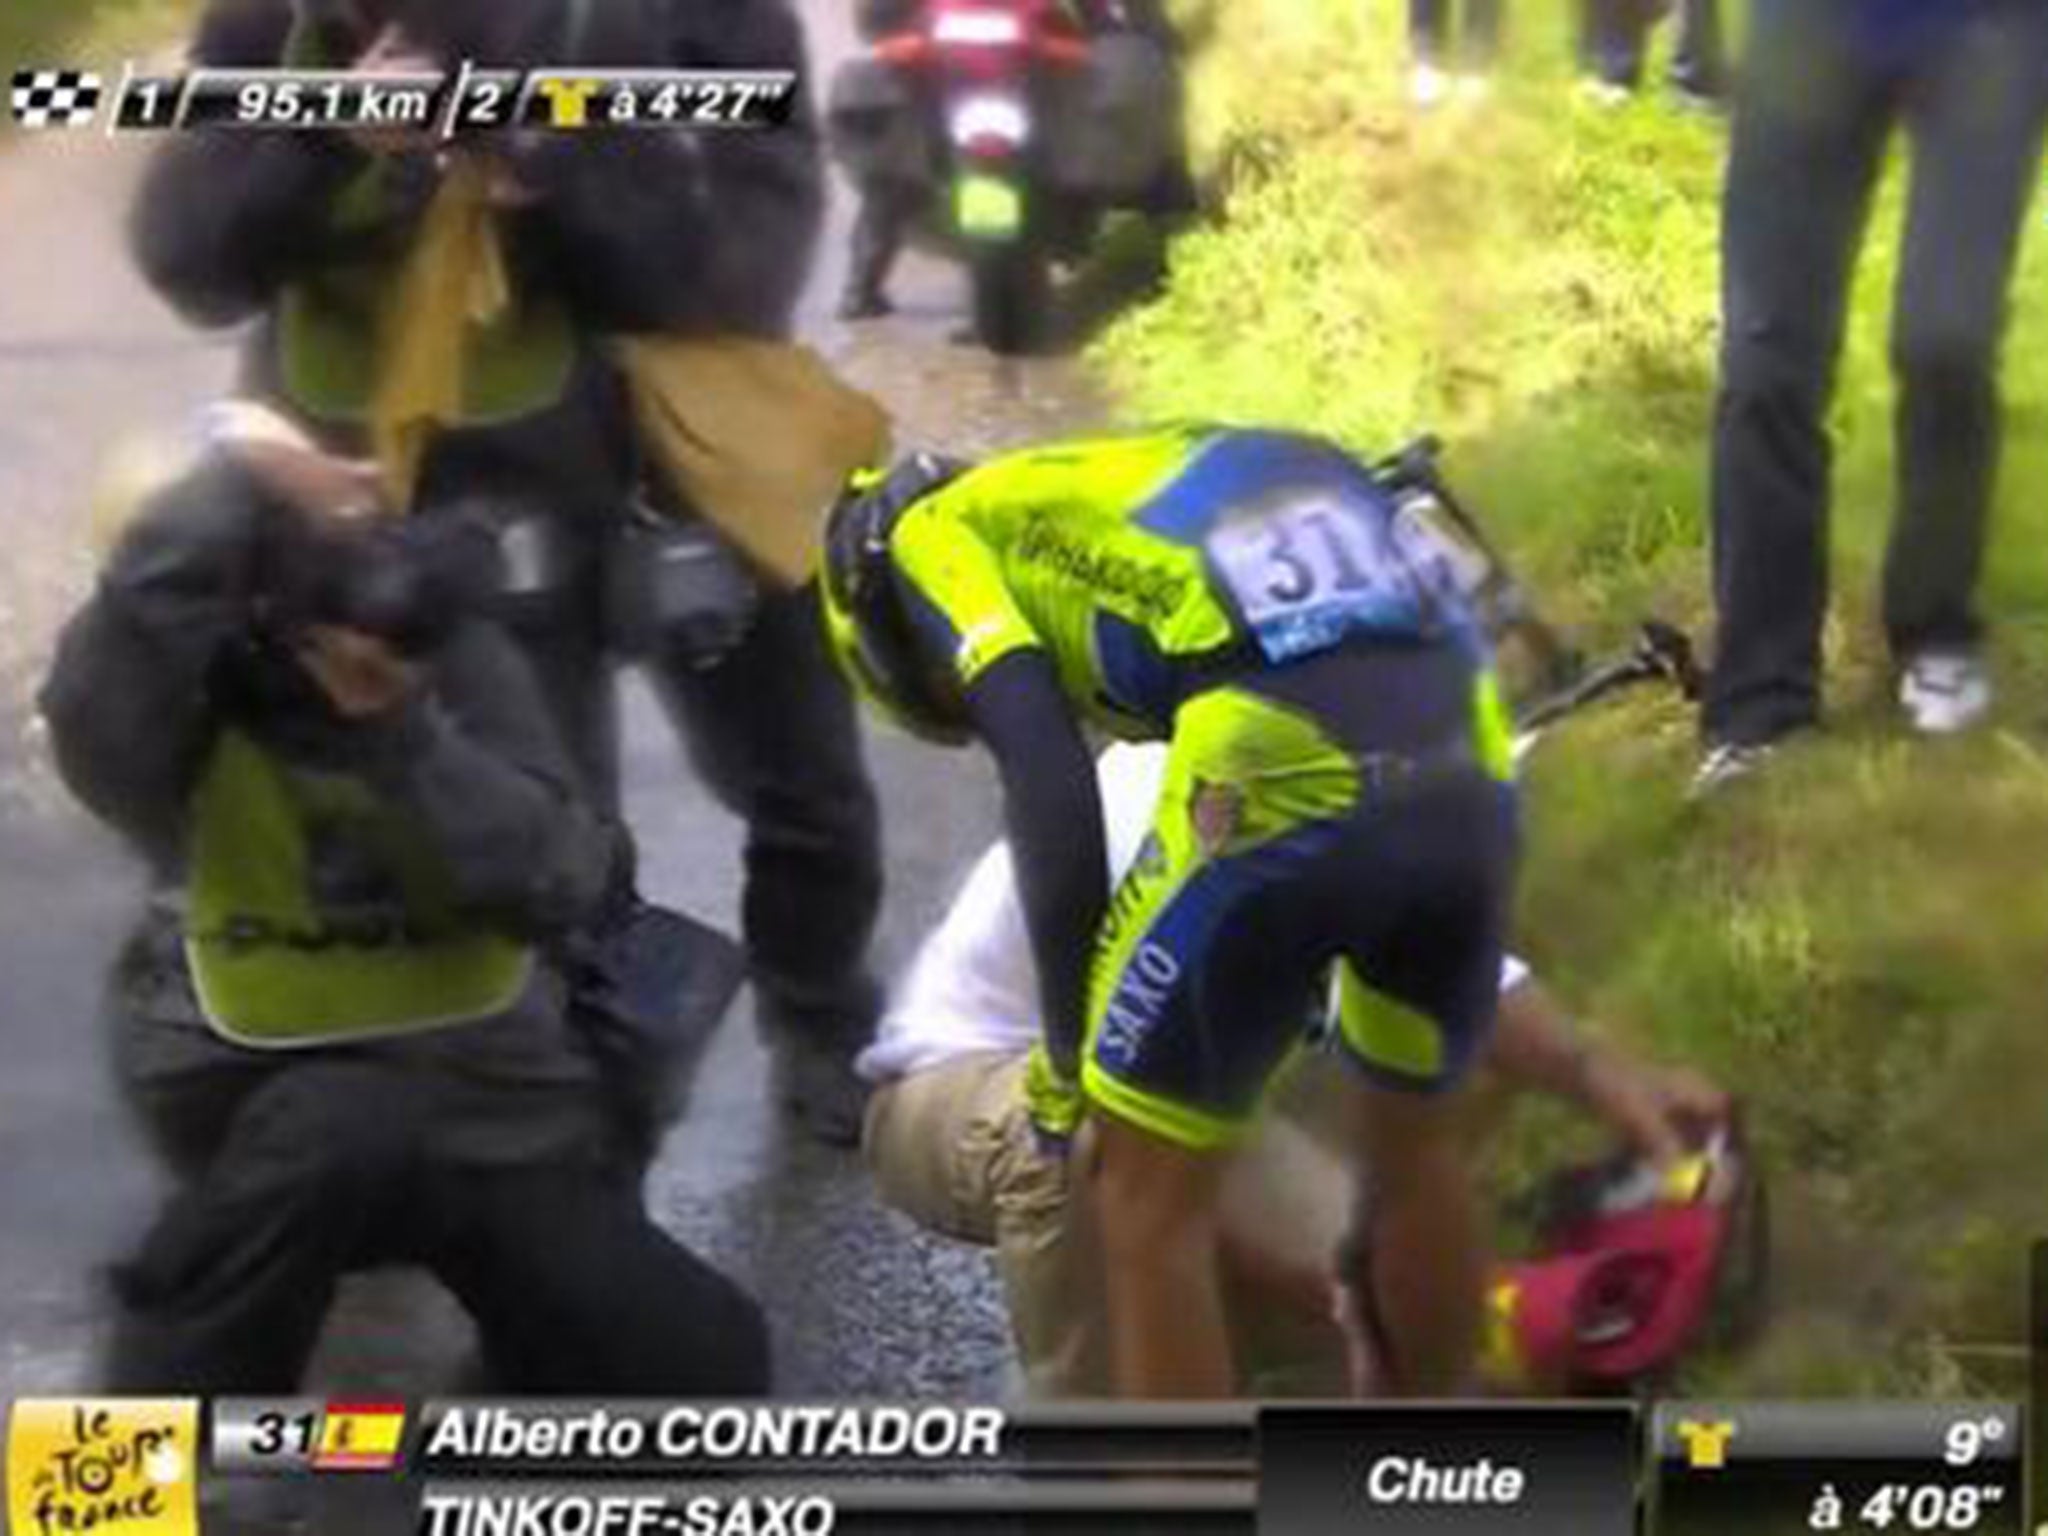 Alberto Contador suffers a crash on stage 10 of the 2014 Tour de France